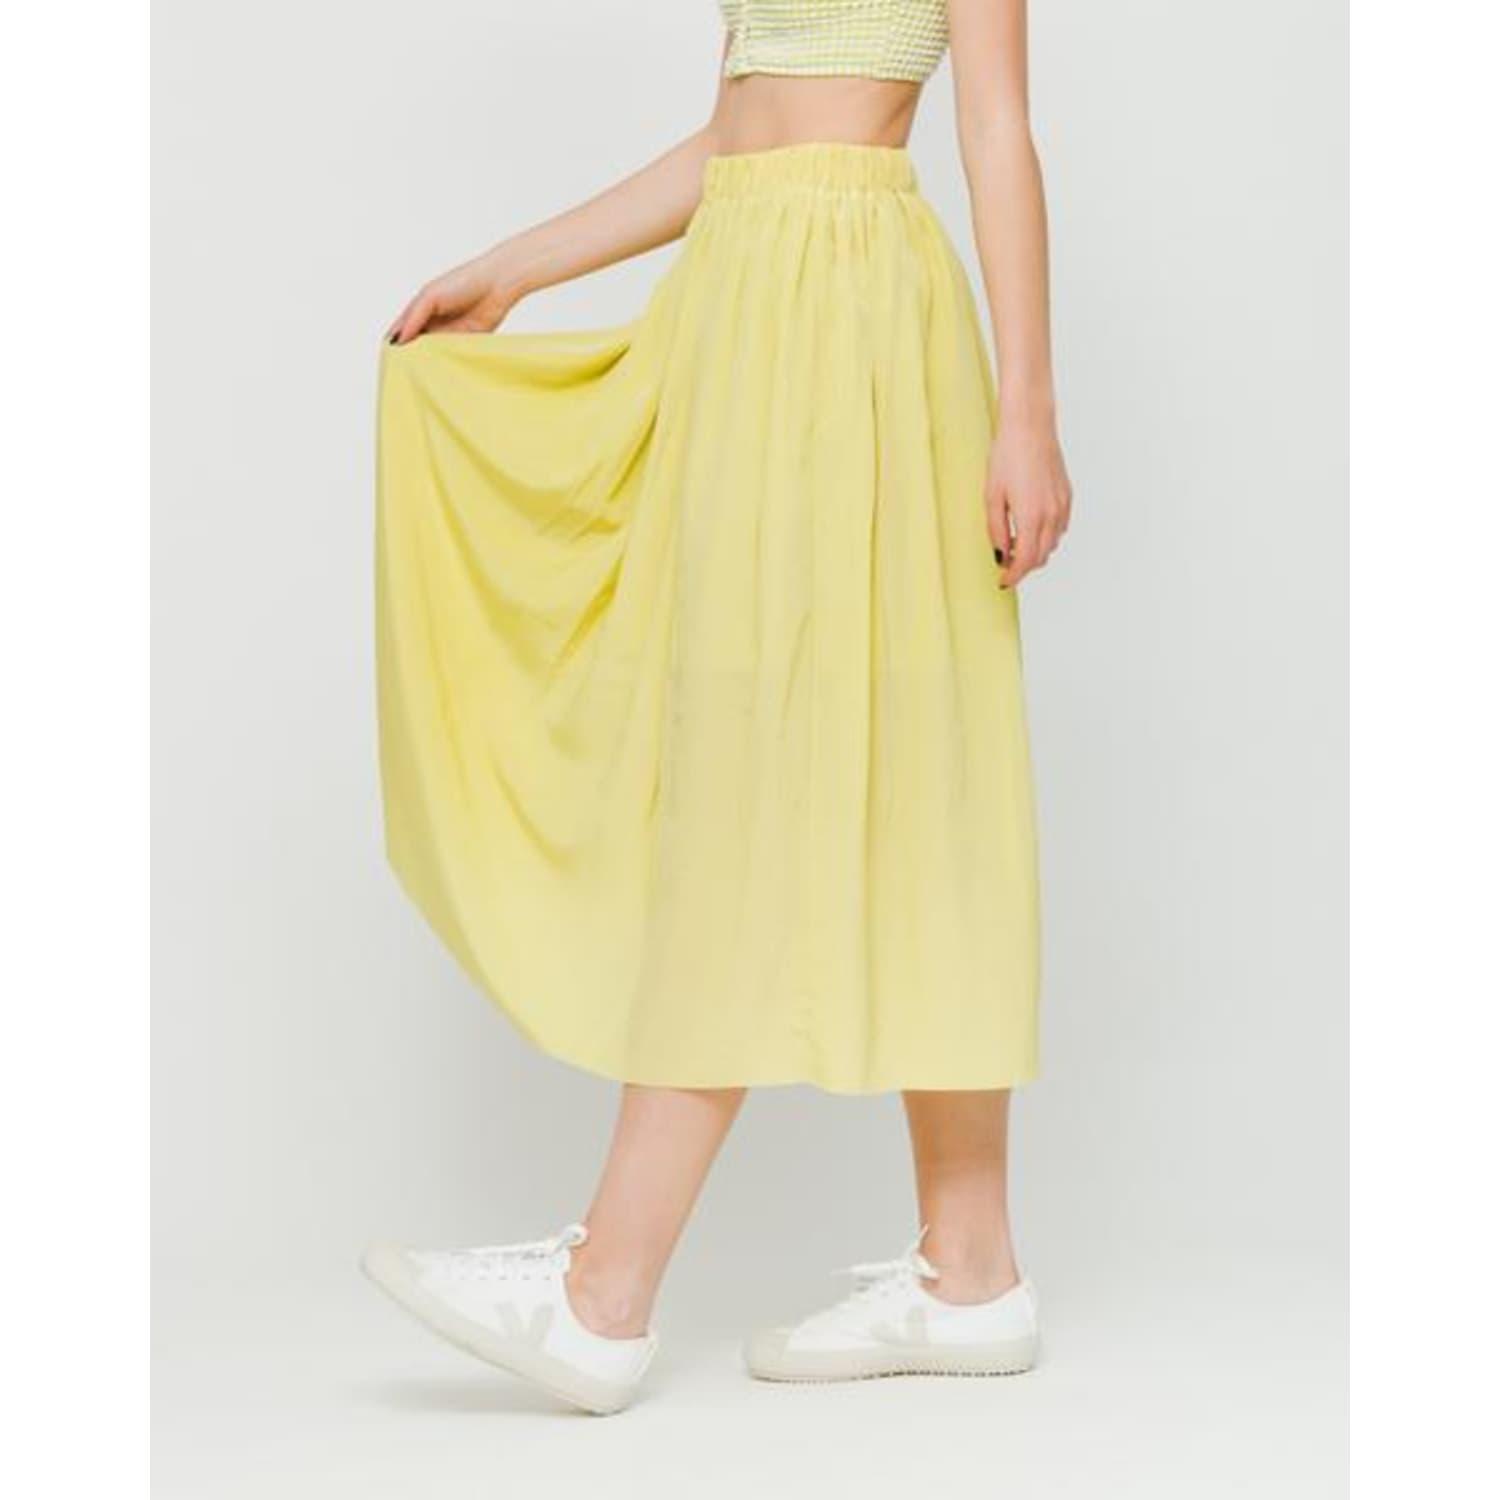 Samsøe & Samsøe Synthetic Endive Nadia 10222 Skirt, Plain Pattern in  Yellow/Green (Yellow) - Lyst